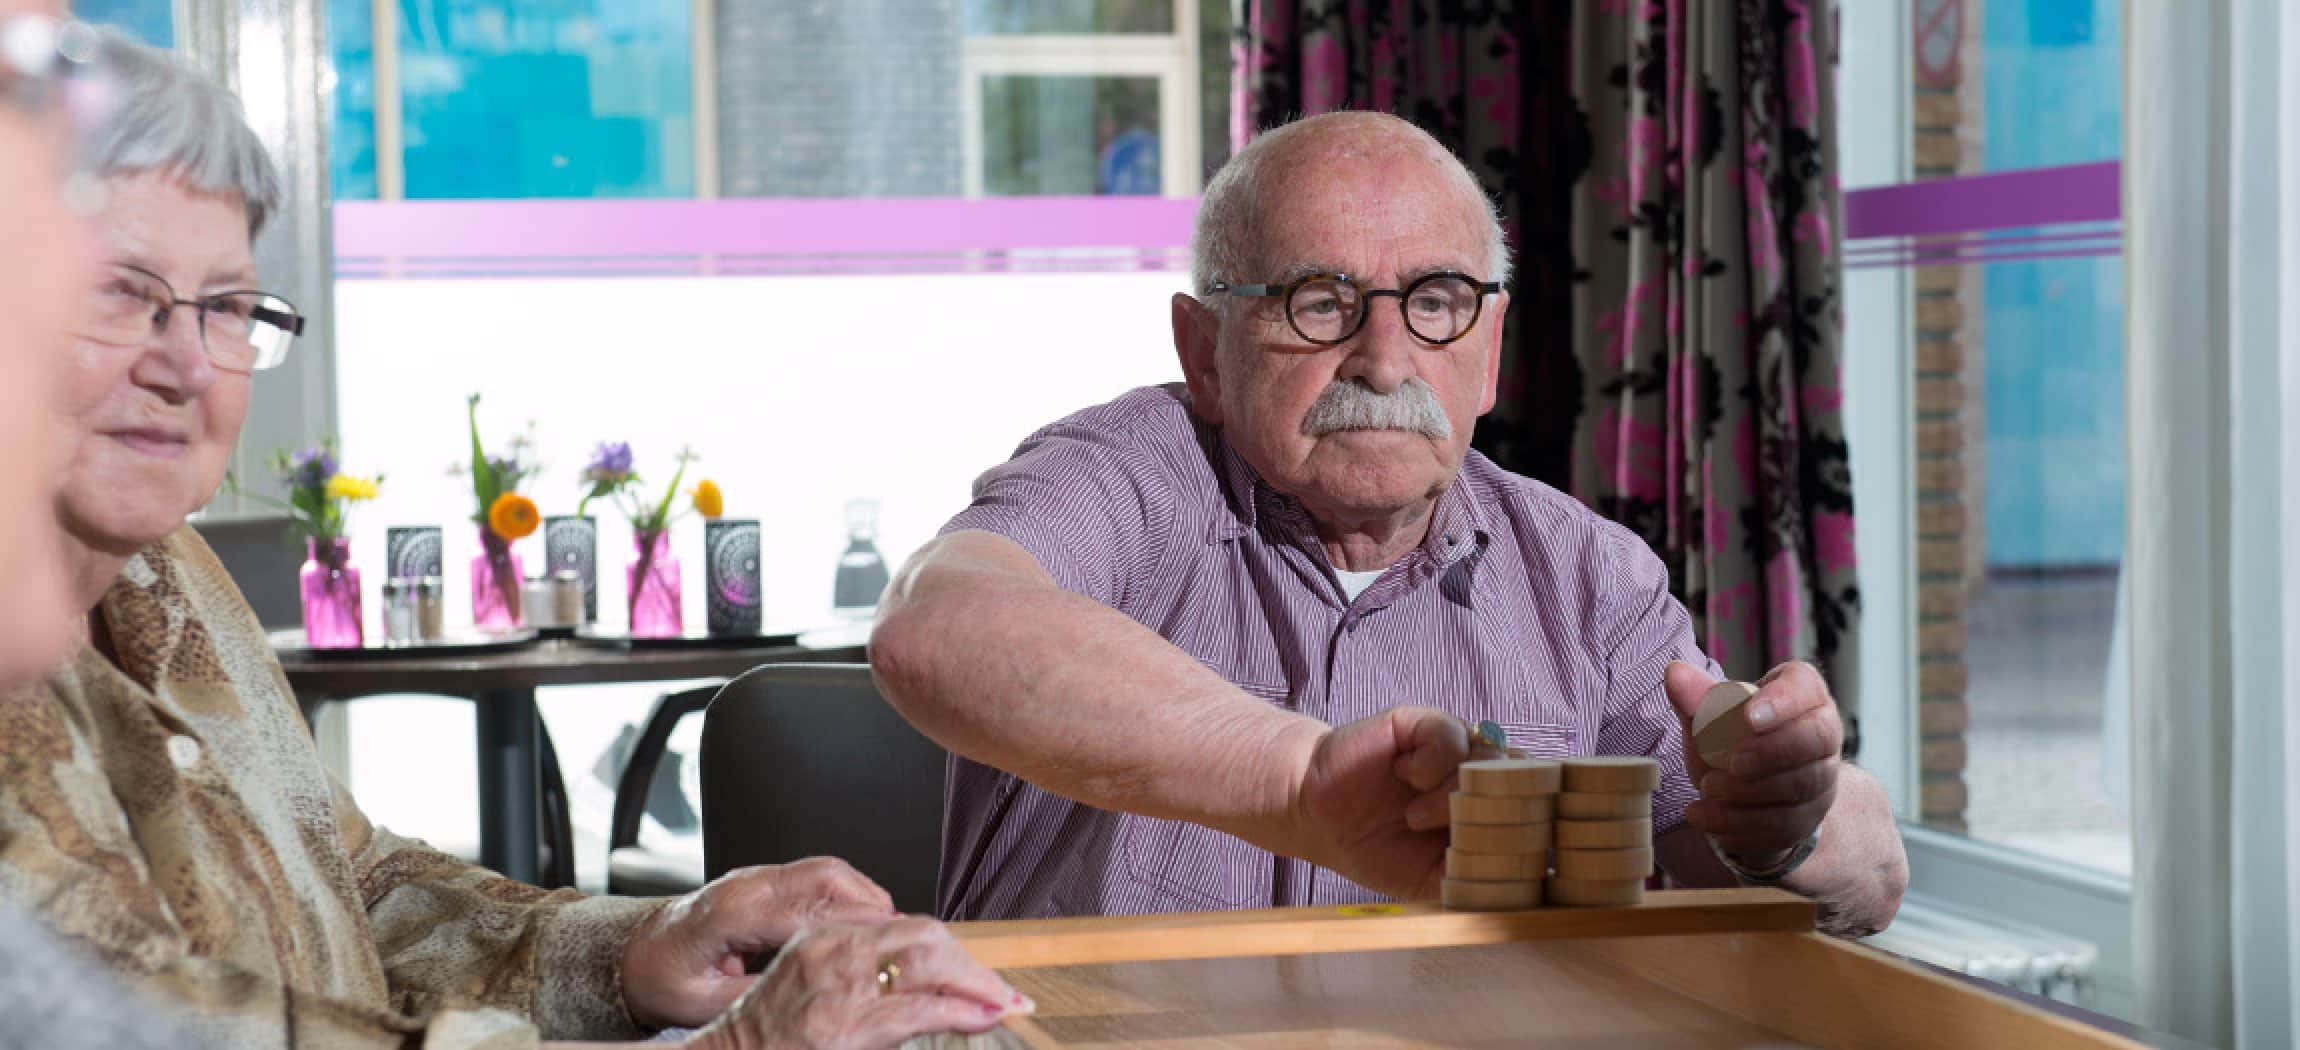 Sjoelen: oudere man met snor en bril speelt het Oud-Hollandse spel sjoelen